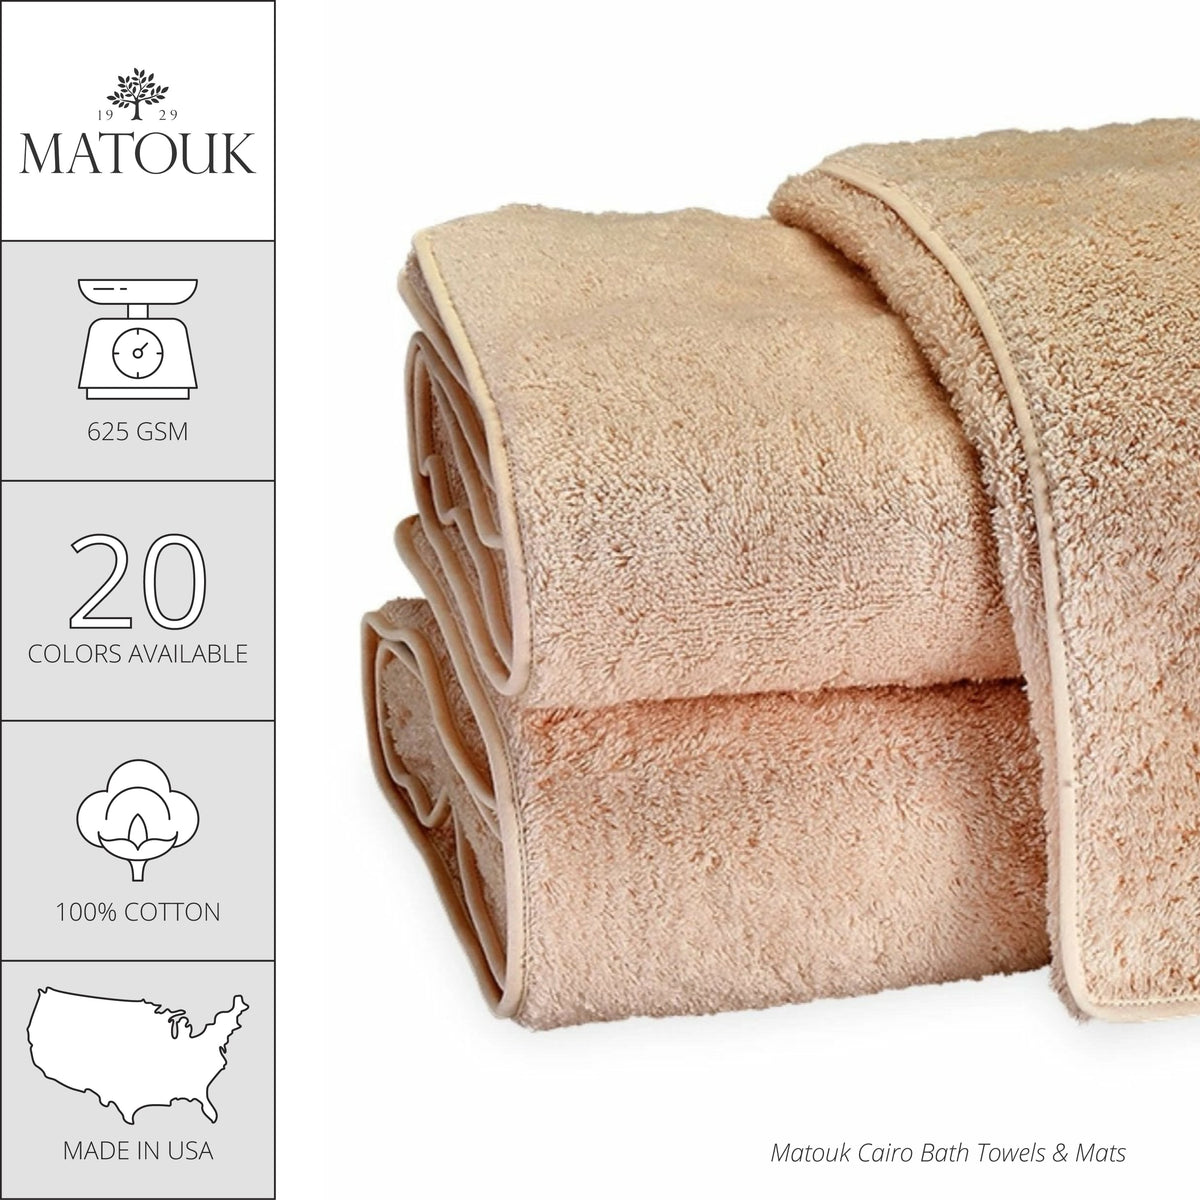 Matouk Cairo Scallop Bath Towels and Mats - Lemon